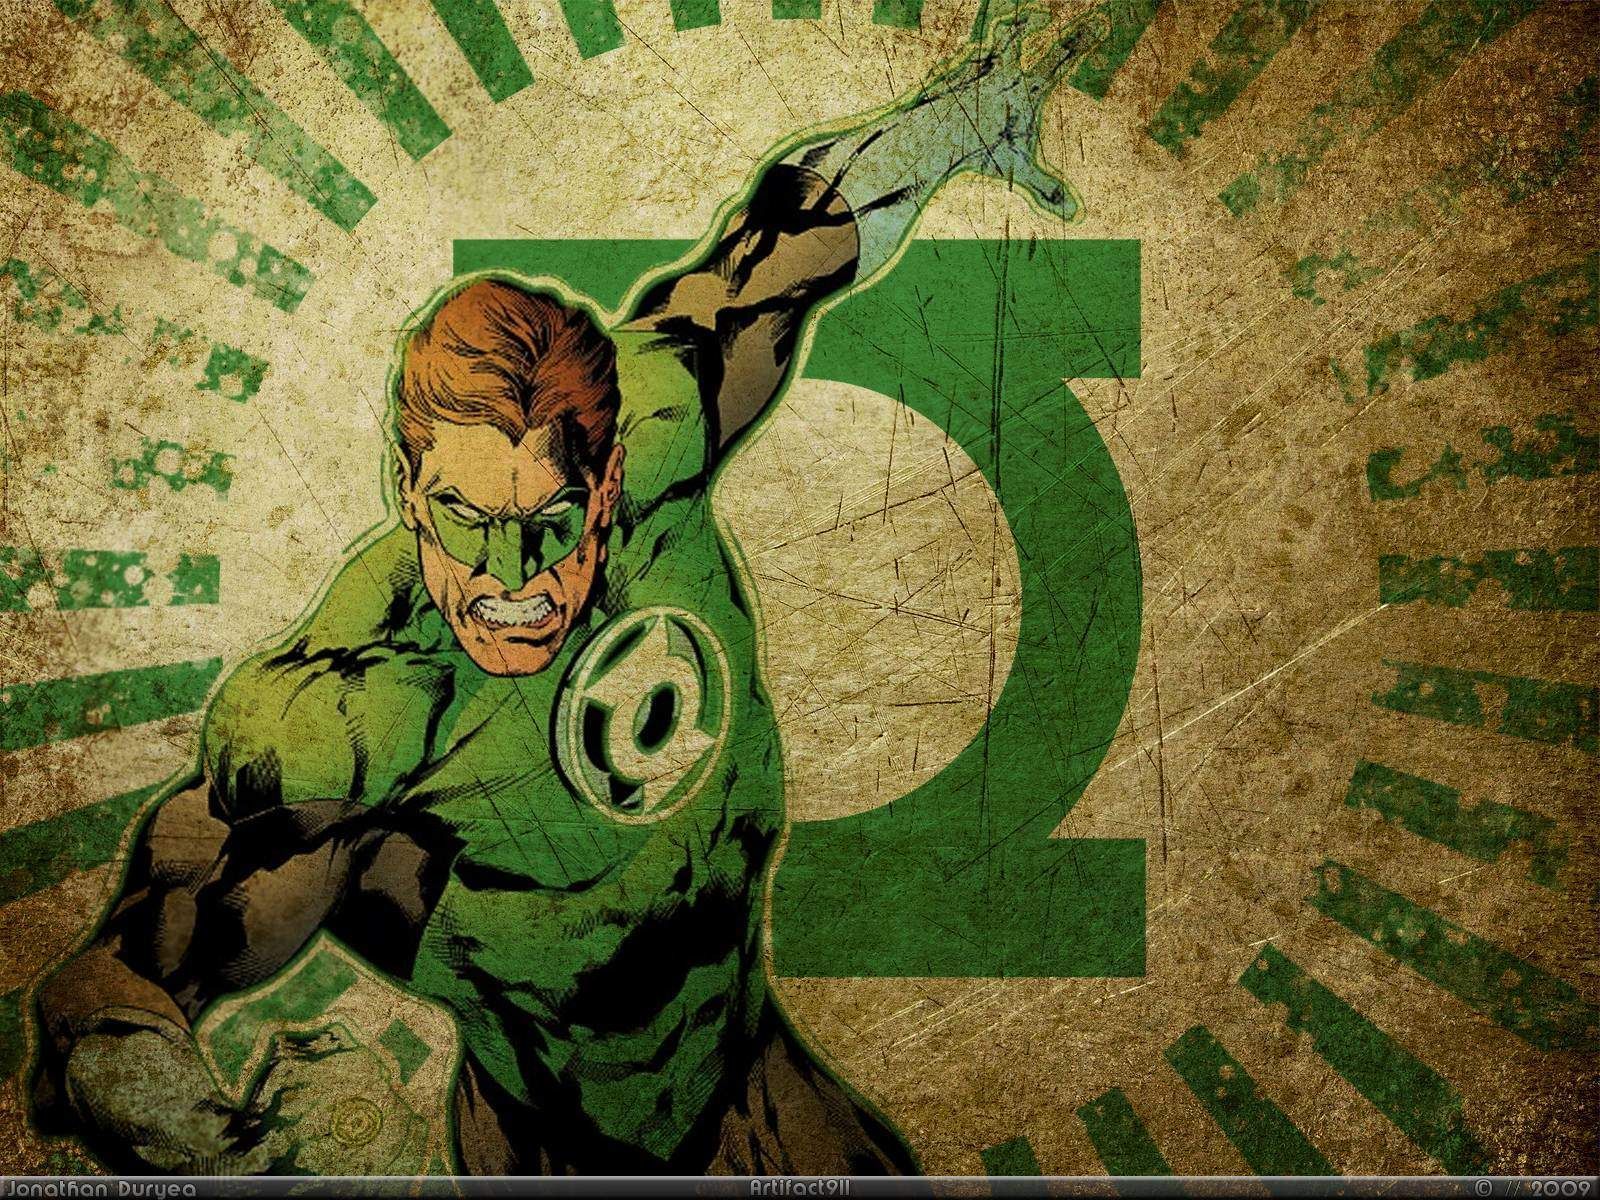 Green Lantern Wallpaper Free Download Cool Picture. Green lantern wallpaper, Green lantern, Green lantern corps